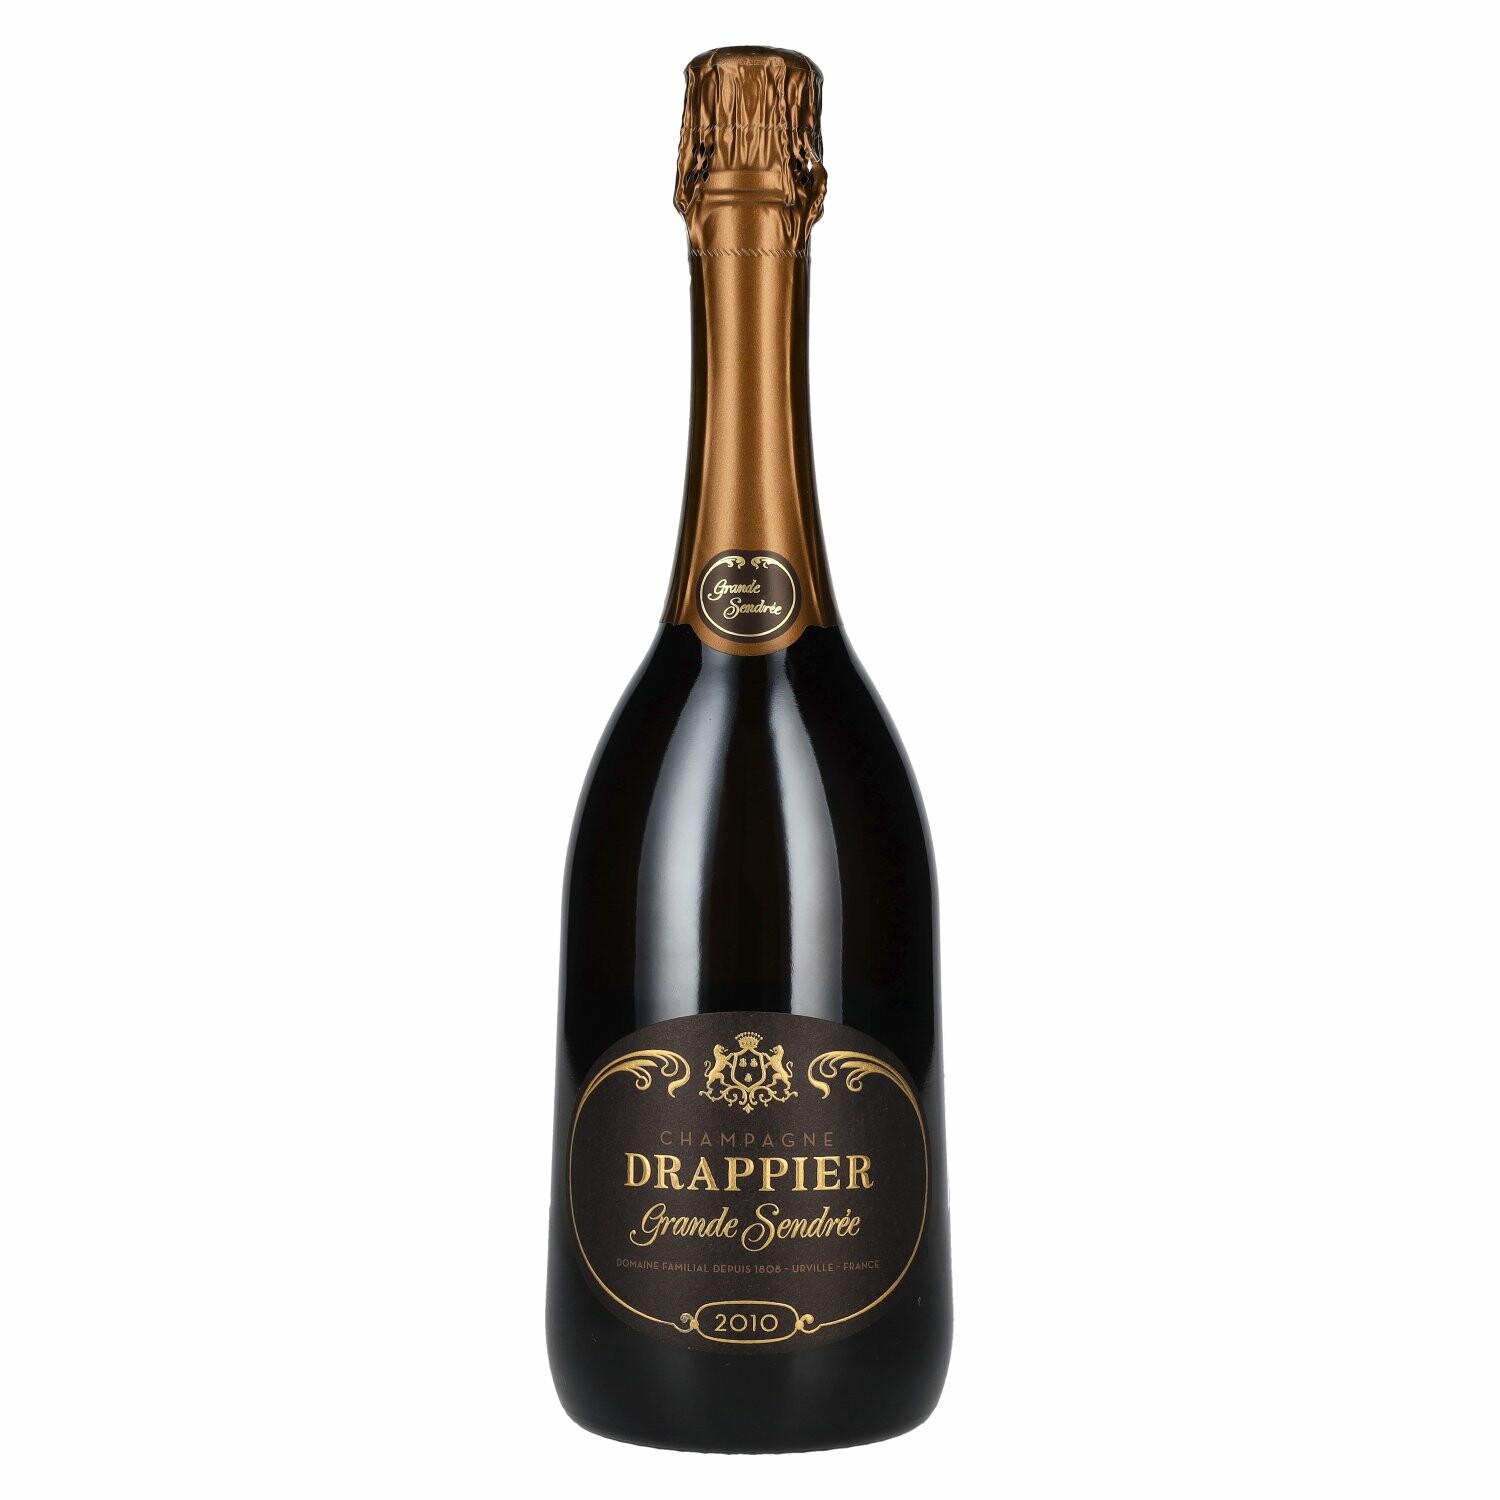 Drappier Champagne Grande Sendrée 2010 12% Vol. 0,75l